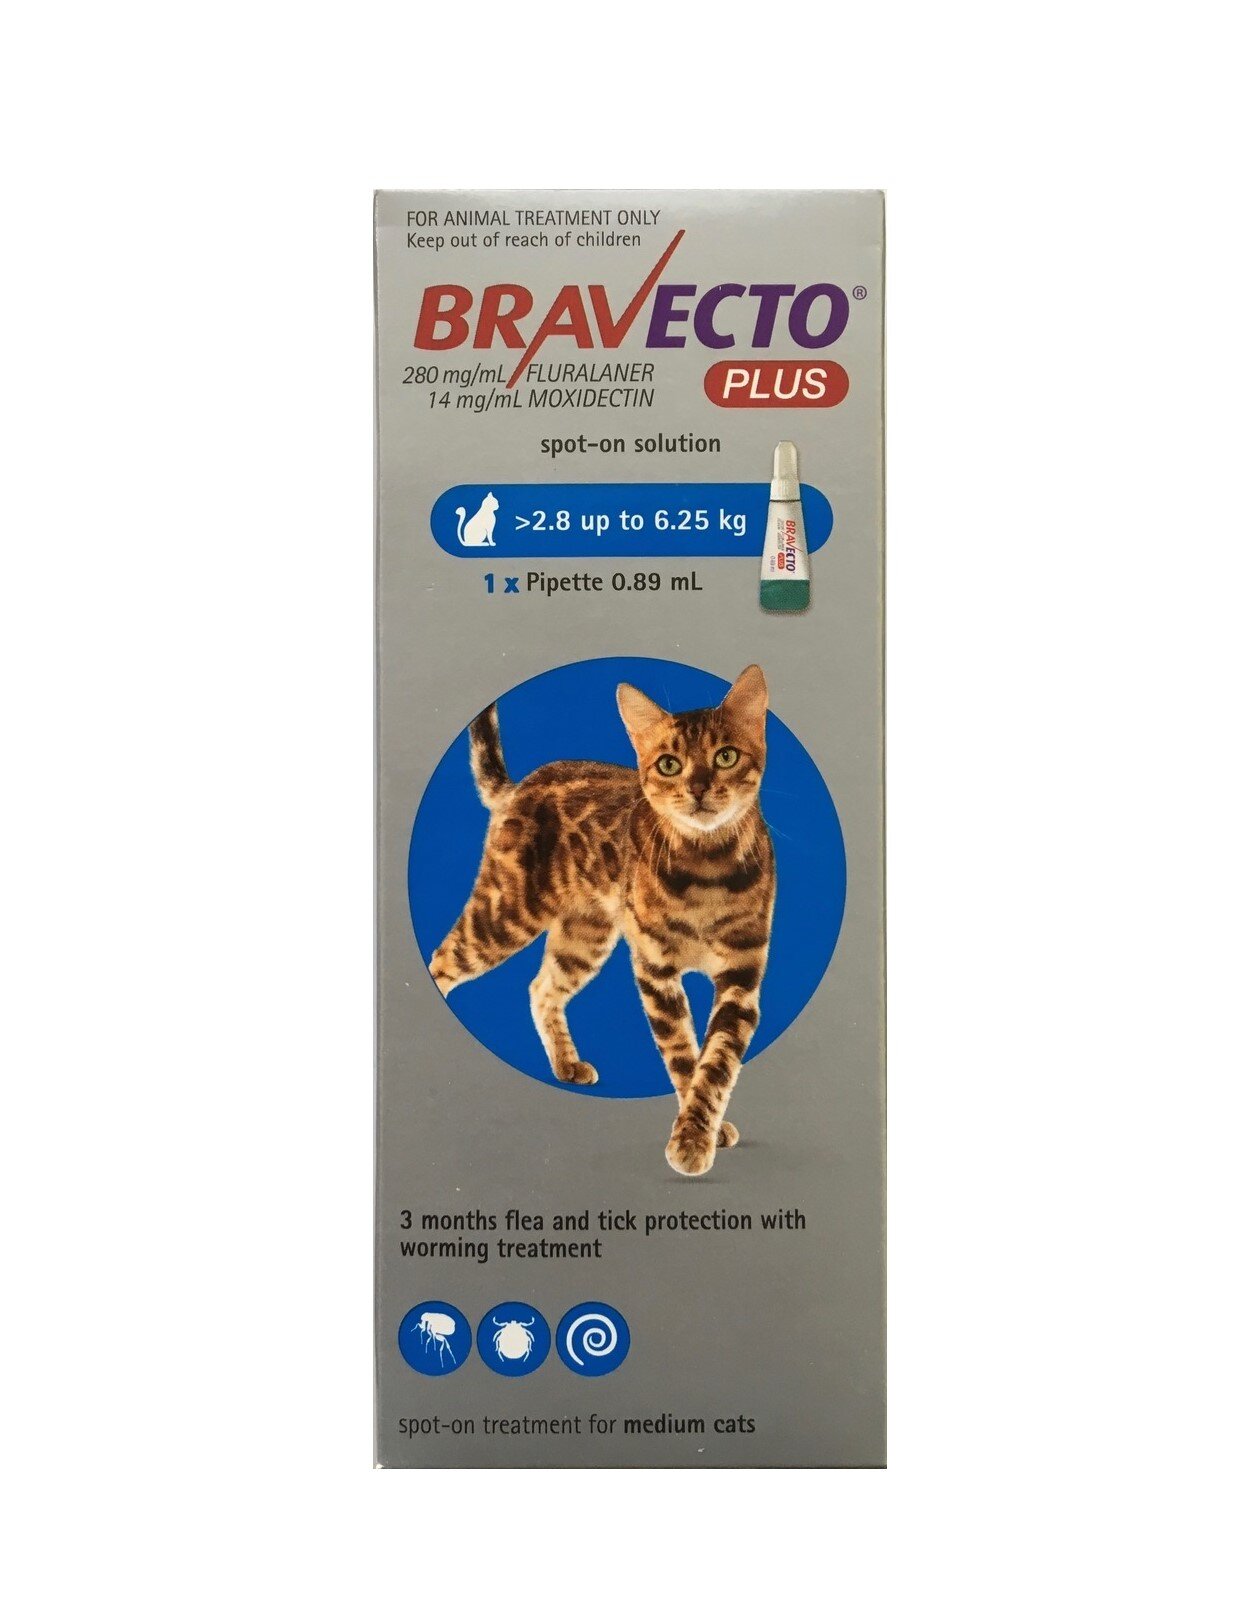 Bravecto Plus Spoton for Medium Cats 2.8 6.25kg CatFlea & Worm